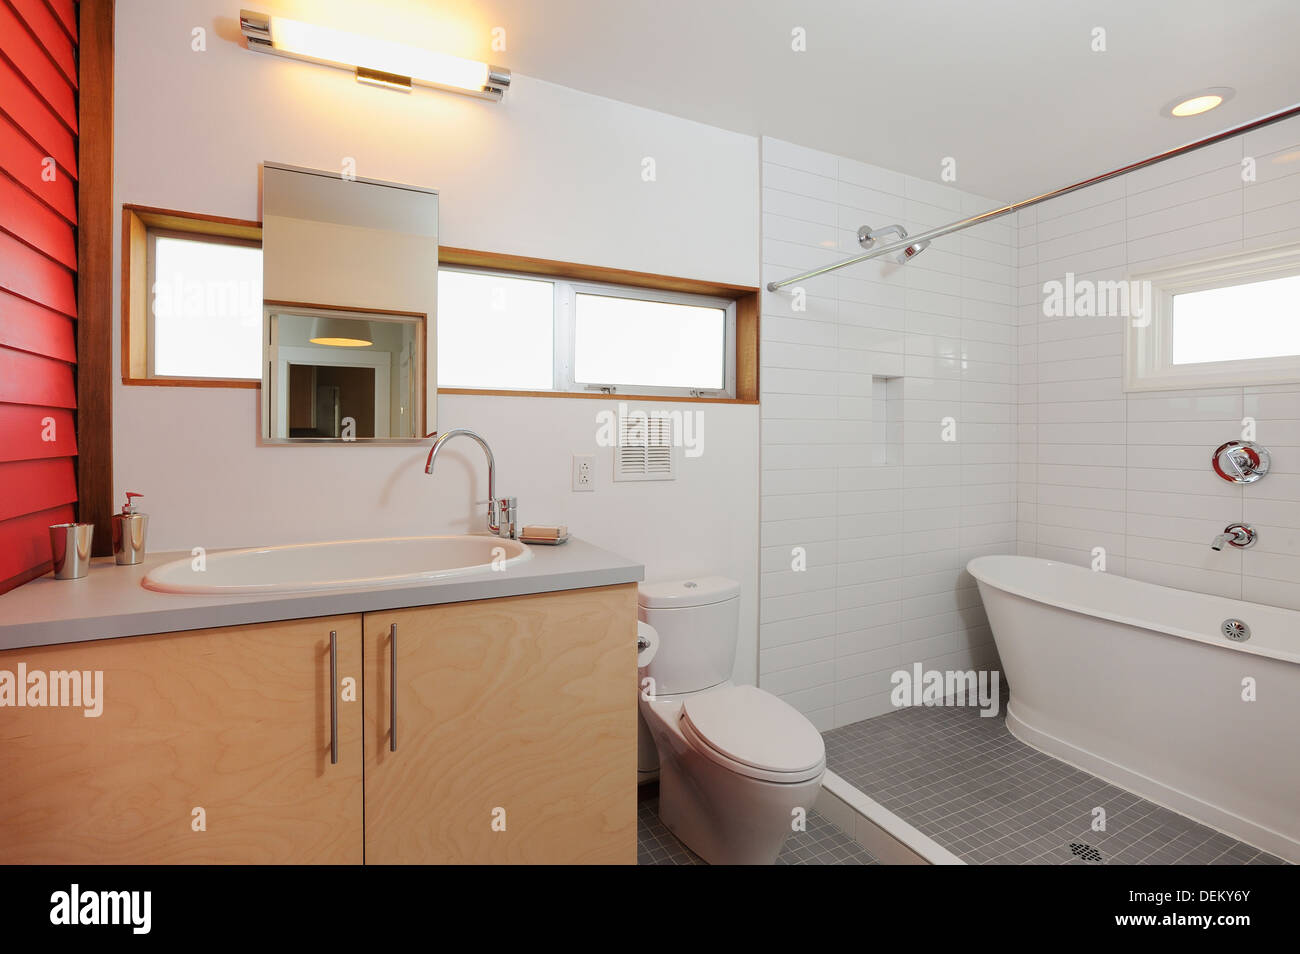 Sink, toilet and bathtub in modern bathroom Stock Photo